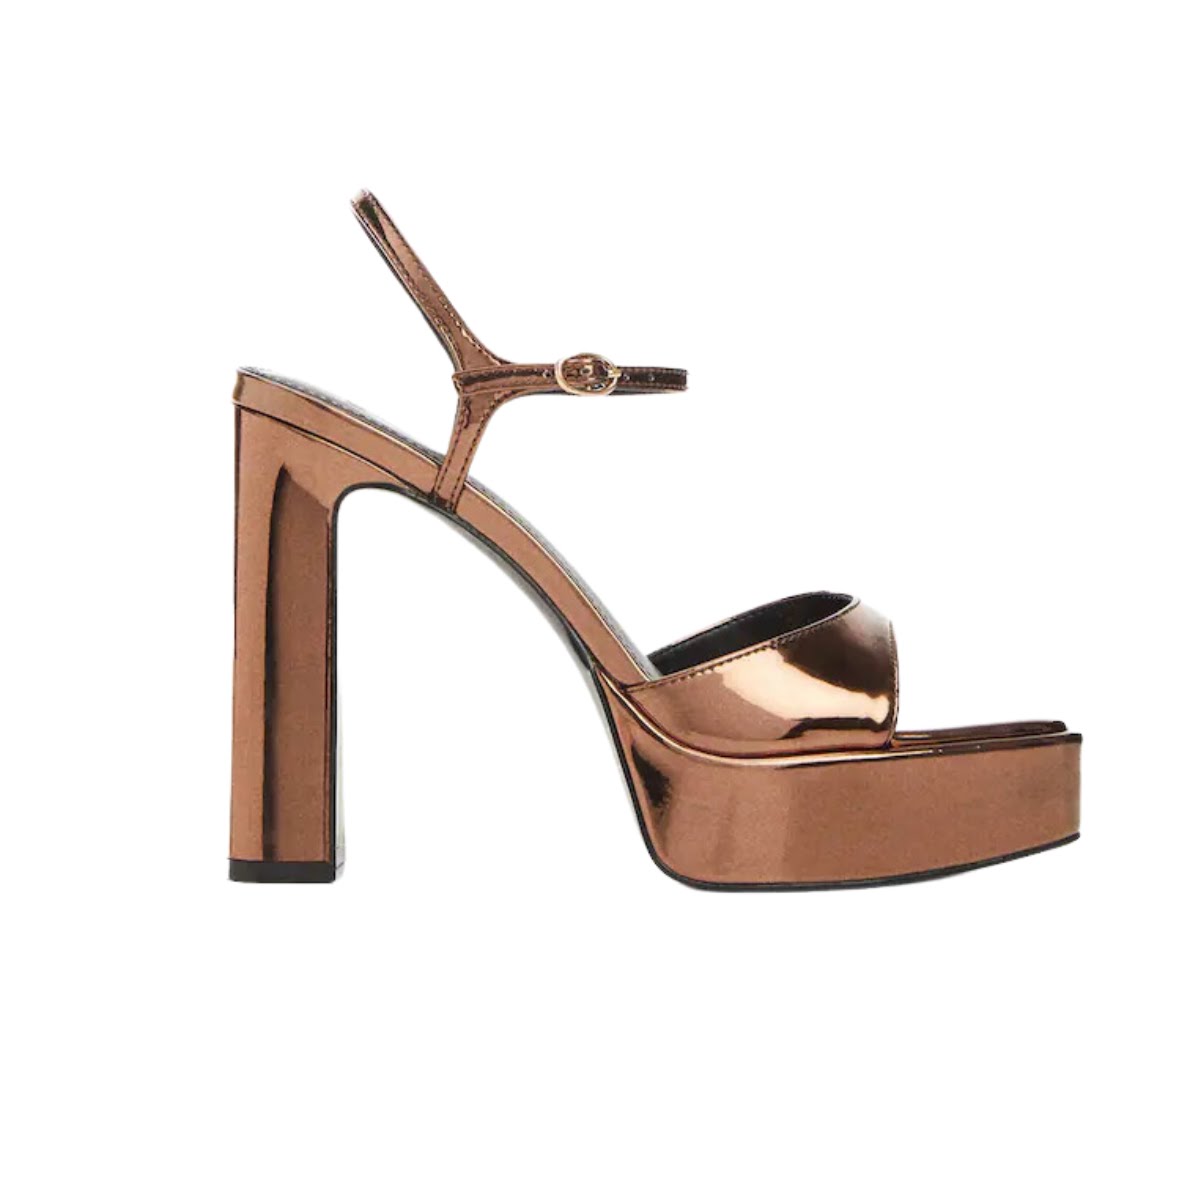 ASOS DESIGN Nation stiletto platform heeled sandals in brown | ASOS